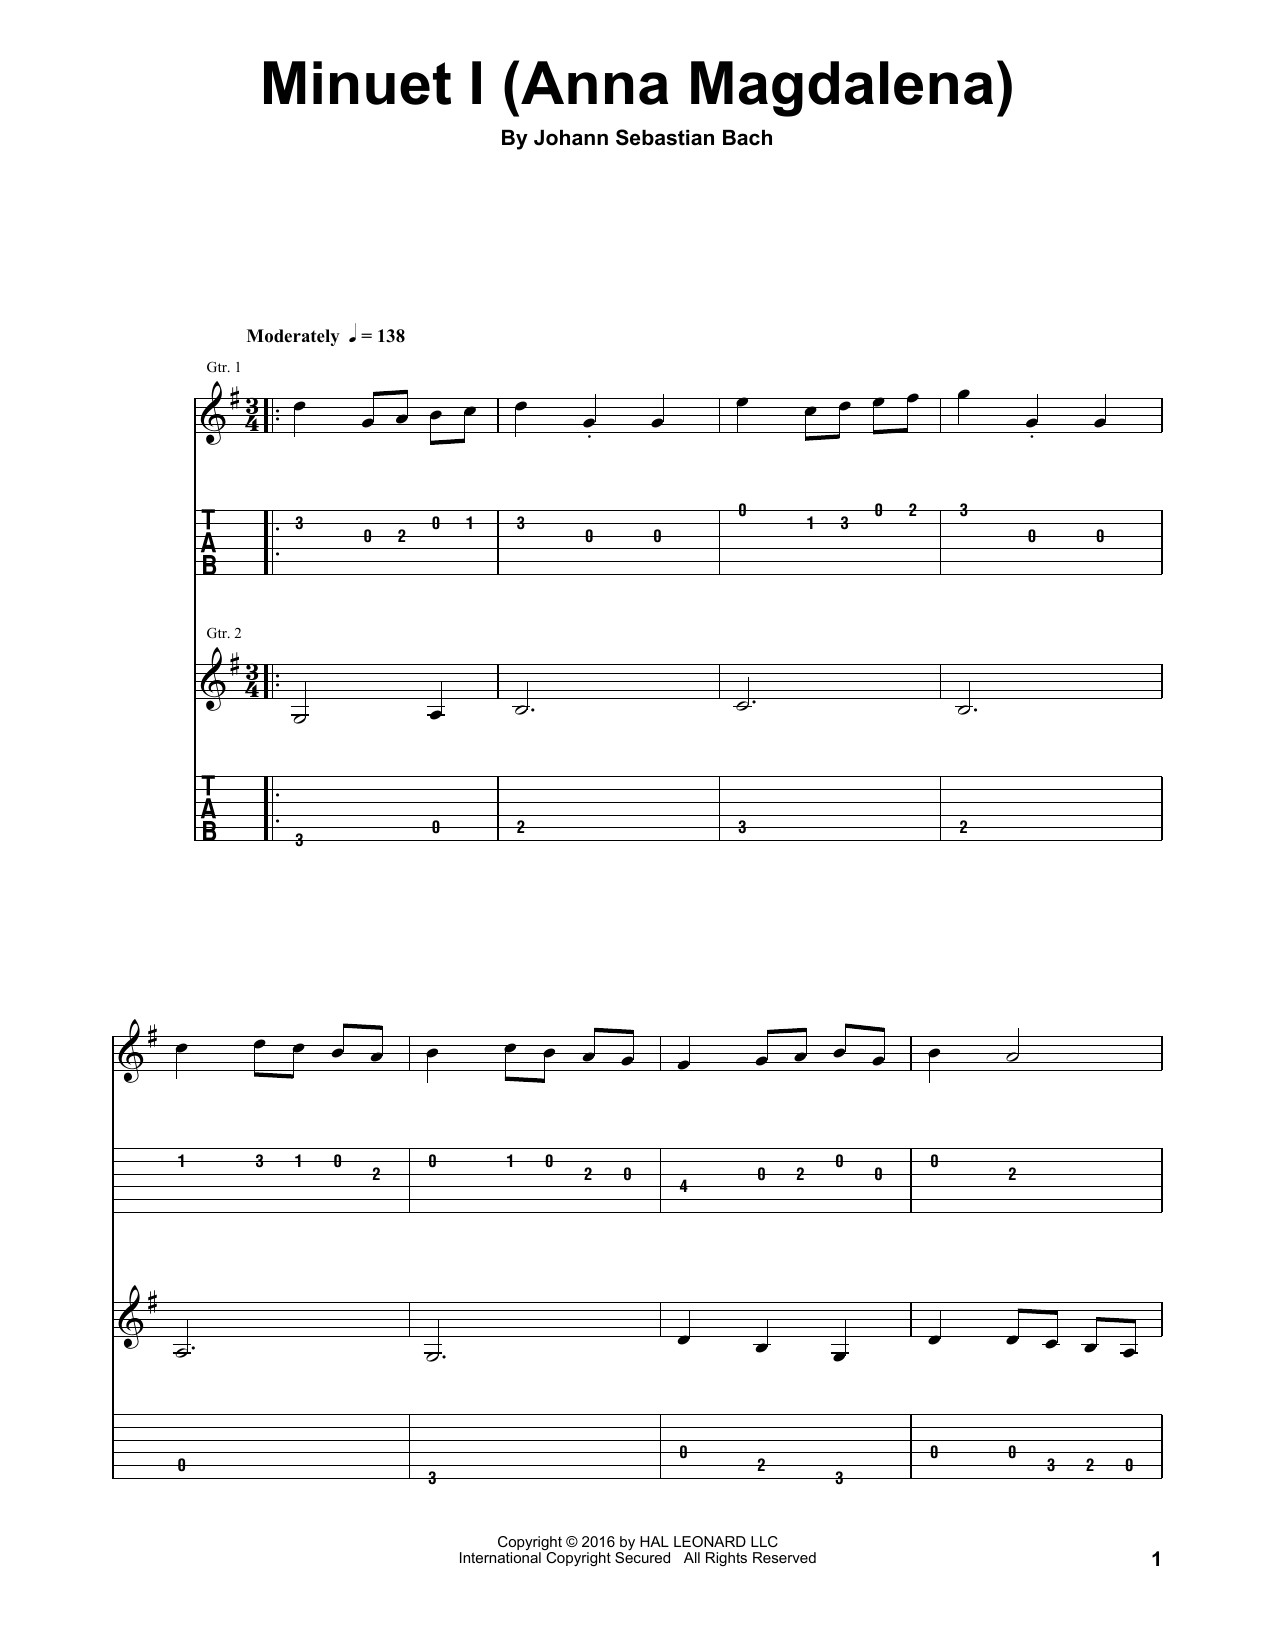 Johann Sebastian Bach Minuet I (Anna Magdalena) Sheet Music Notes & Chords for Guitar Tab Play-Along - Download or Print PDF